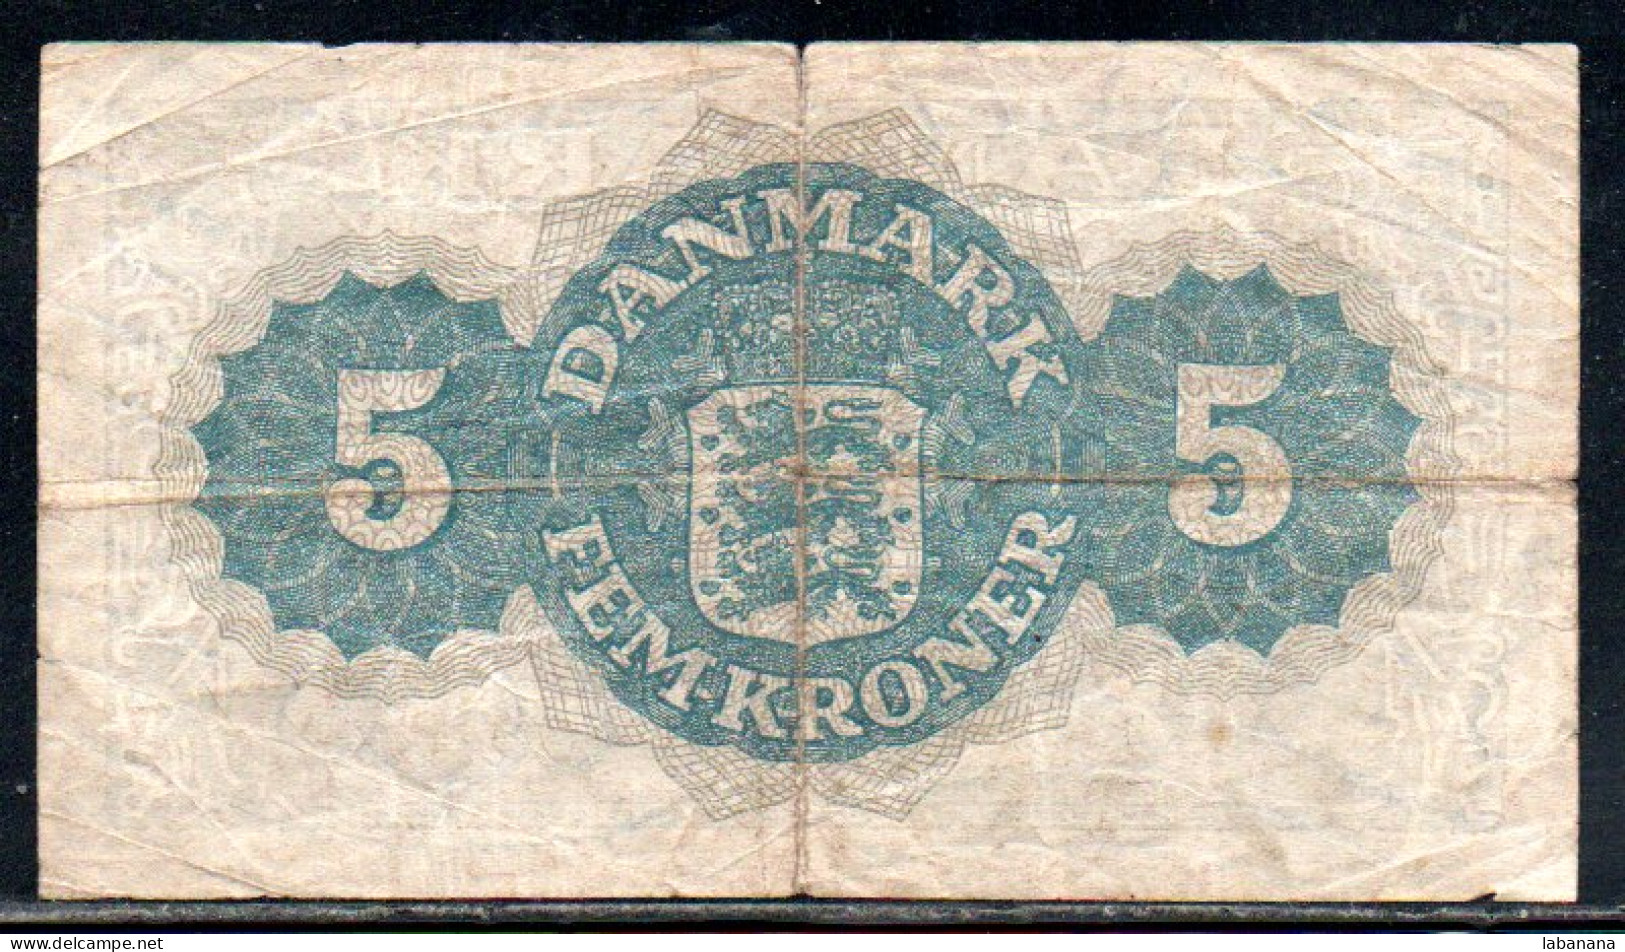 659-Danemark 5 Kroner 1944 AN326 - Dinamarca